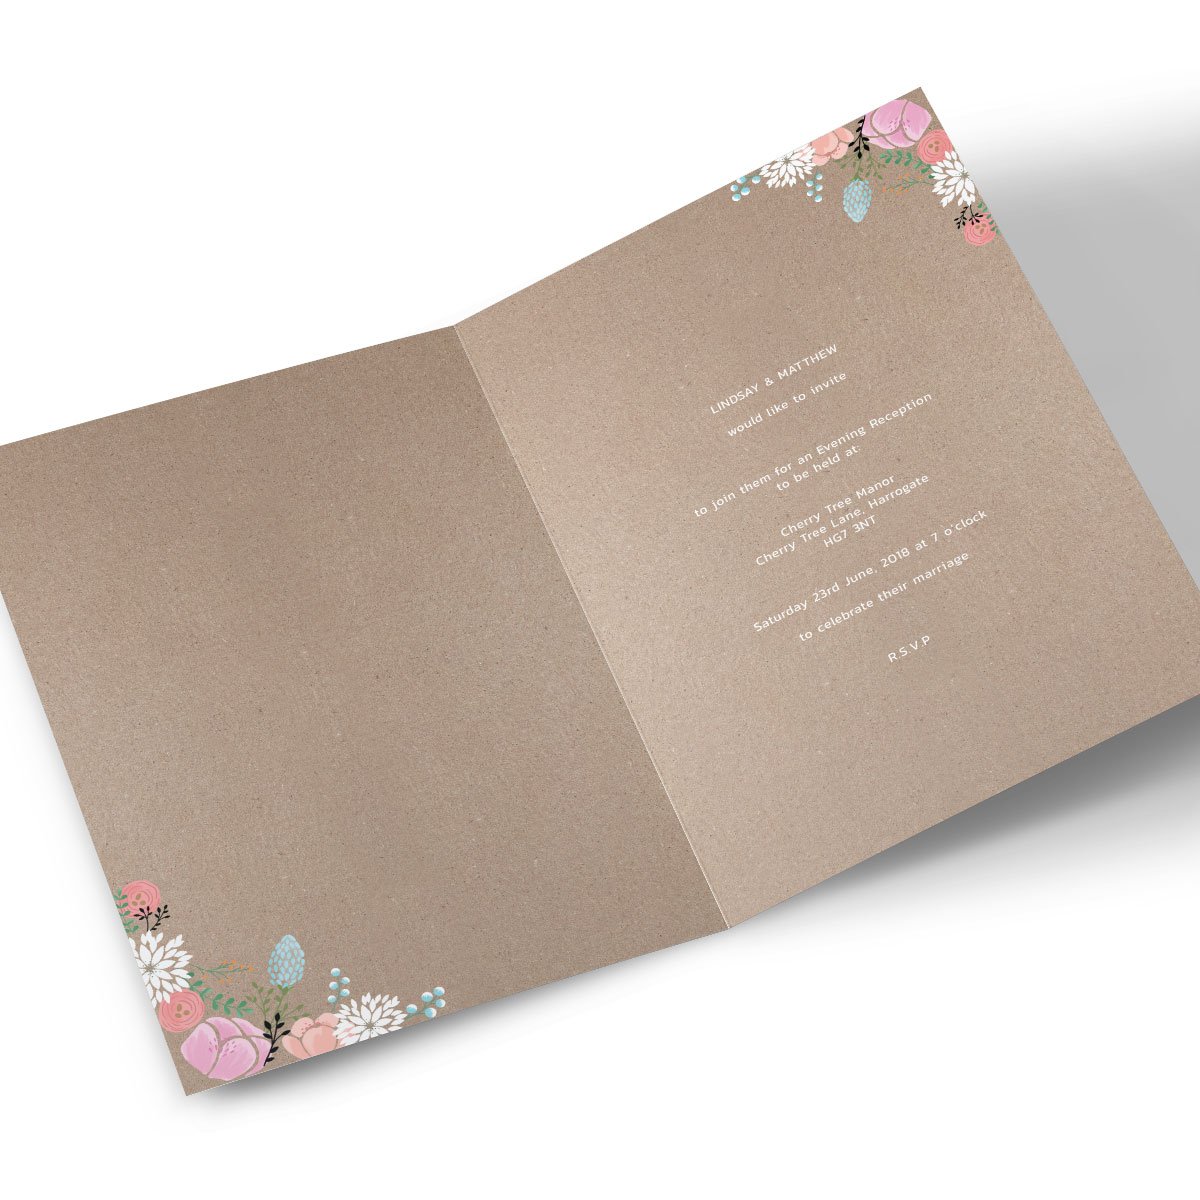 Personalised Evening Reception Invitation - Rustic Floral